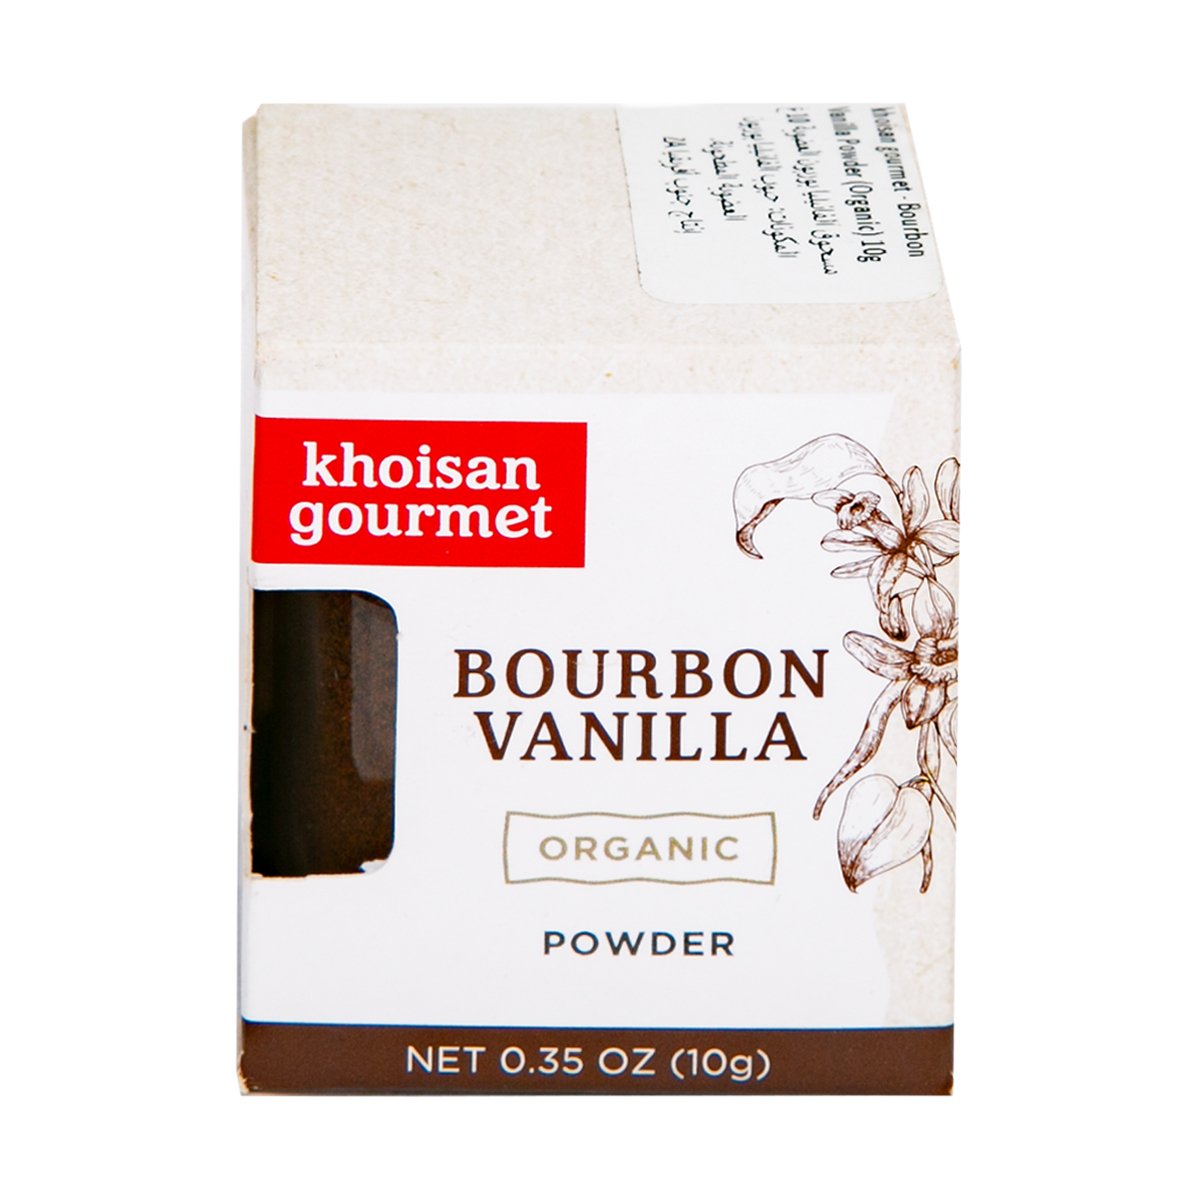 Khoisan Gourmet Organic Bourbon Vanilla Powder 10 g